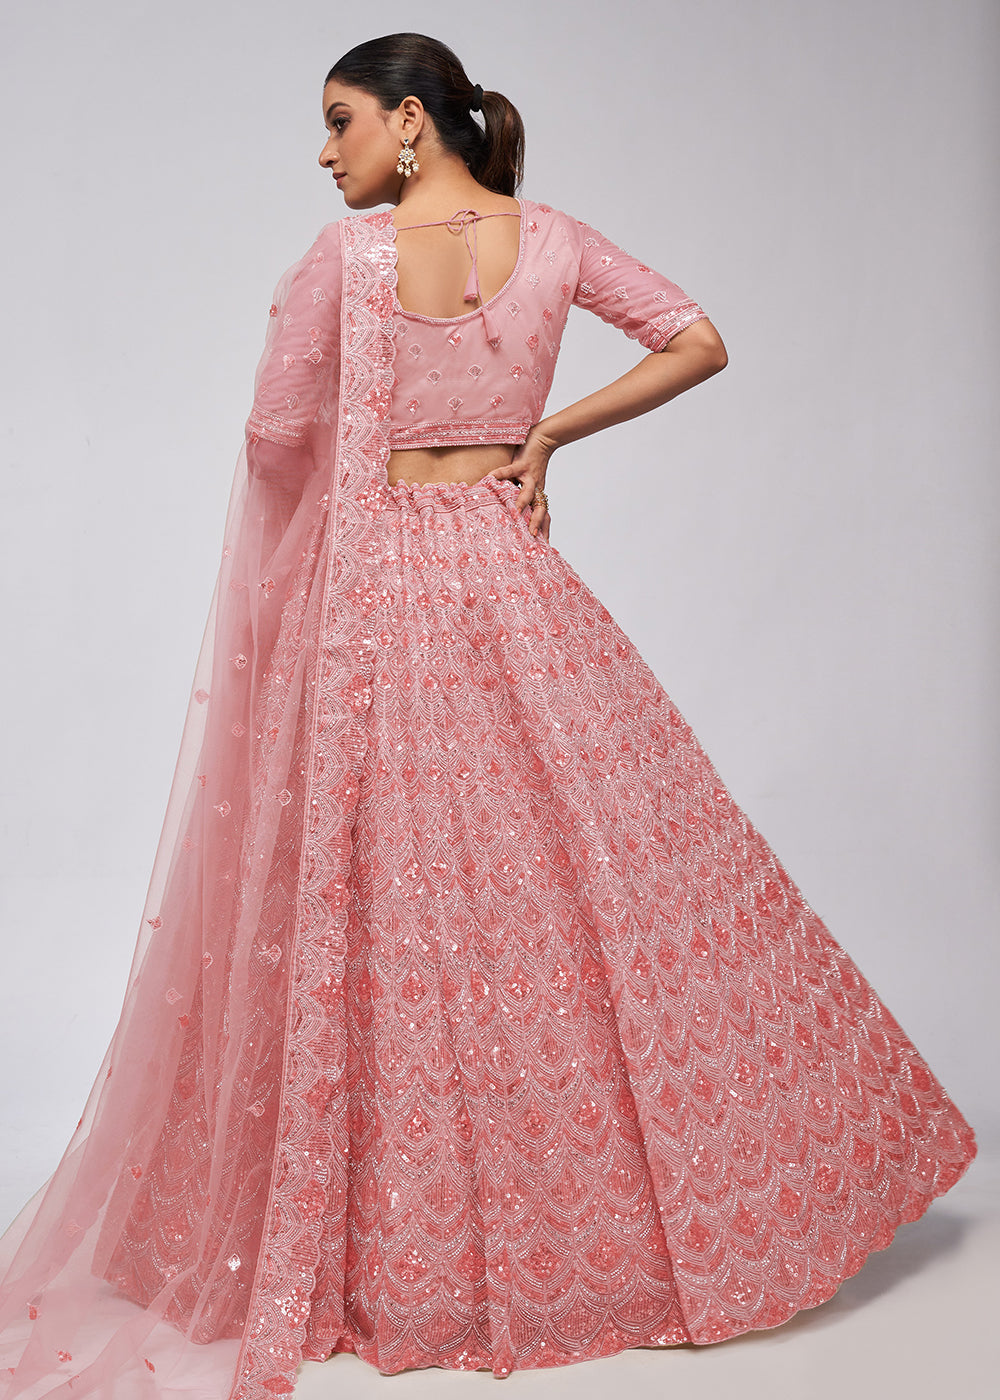 Buy Now Dazzling Pink Bridal Embroidered Designer Lehenga Choli Online in USA, UK, Canada & Worldwide at Empress Clothing.